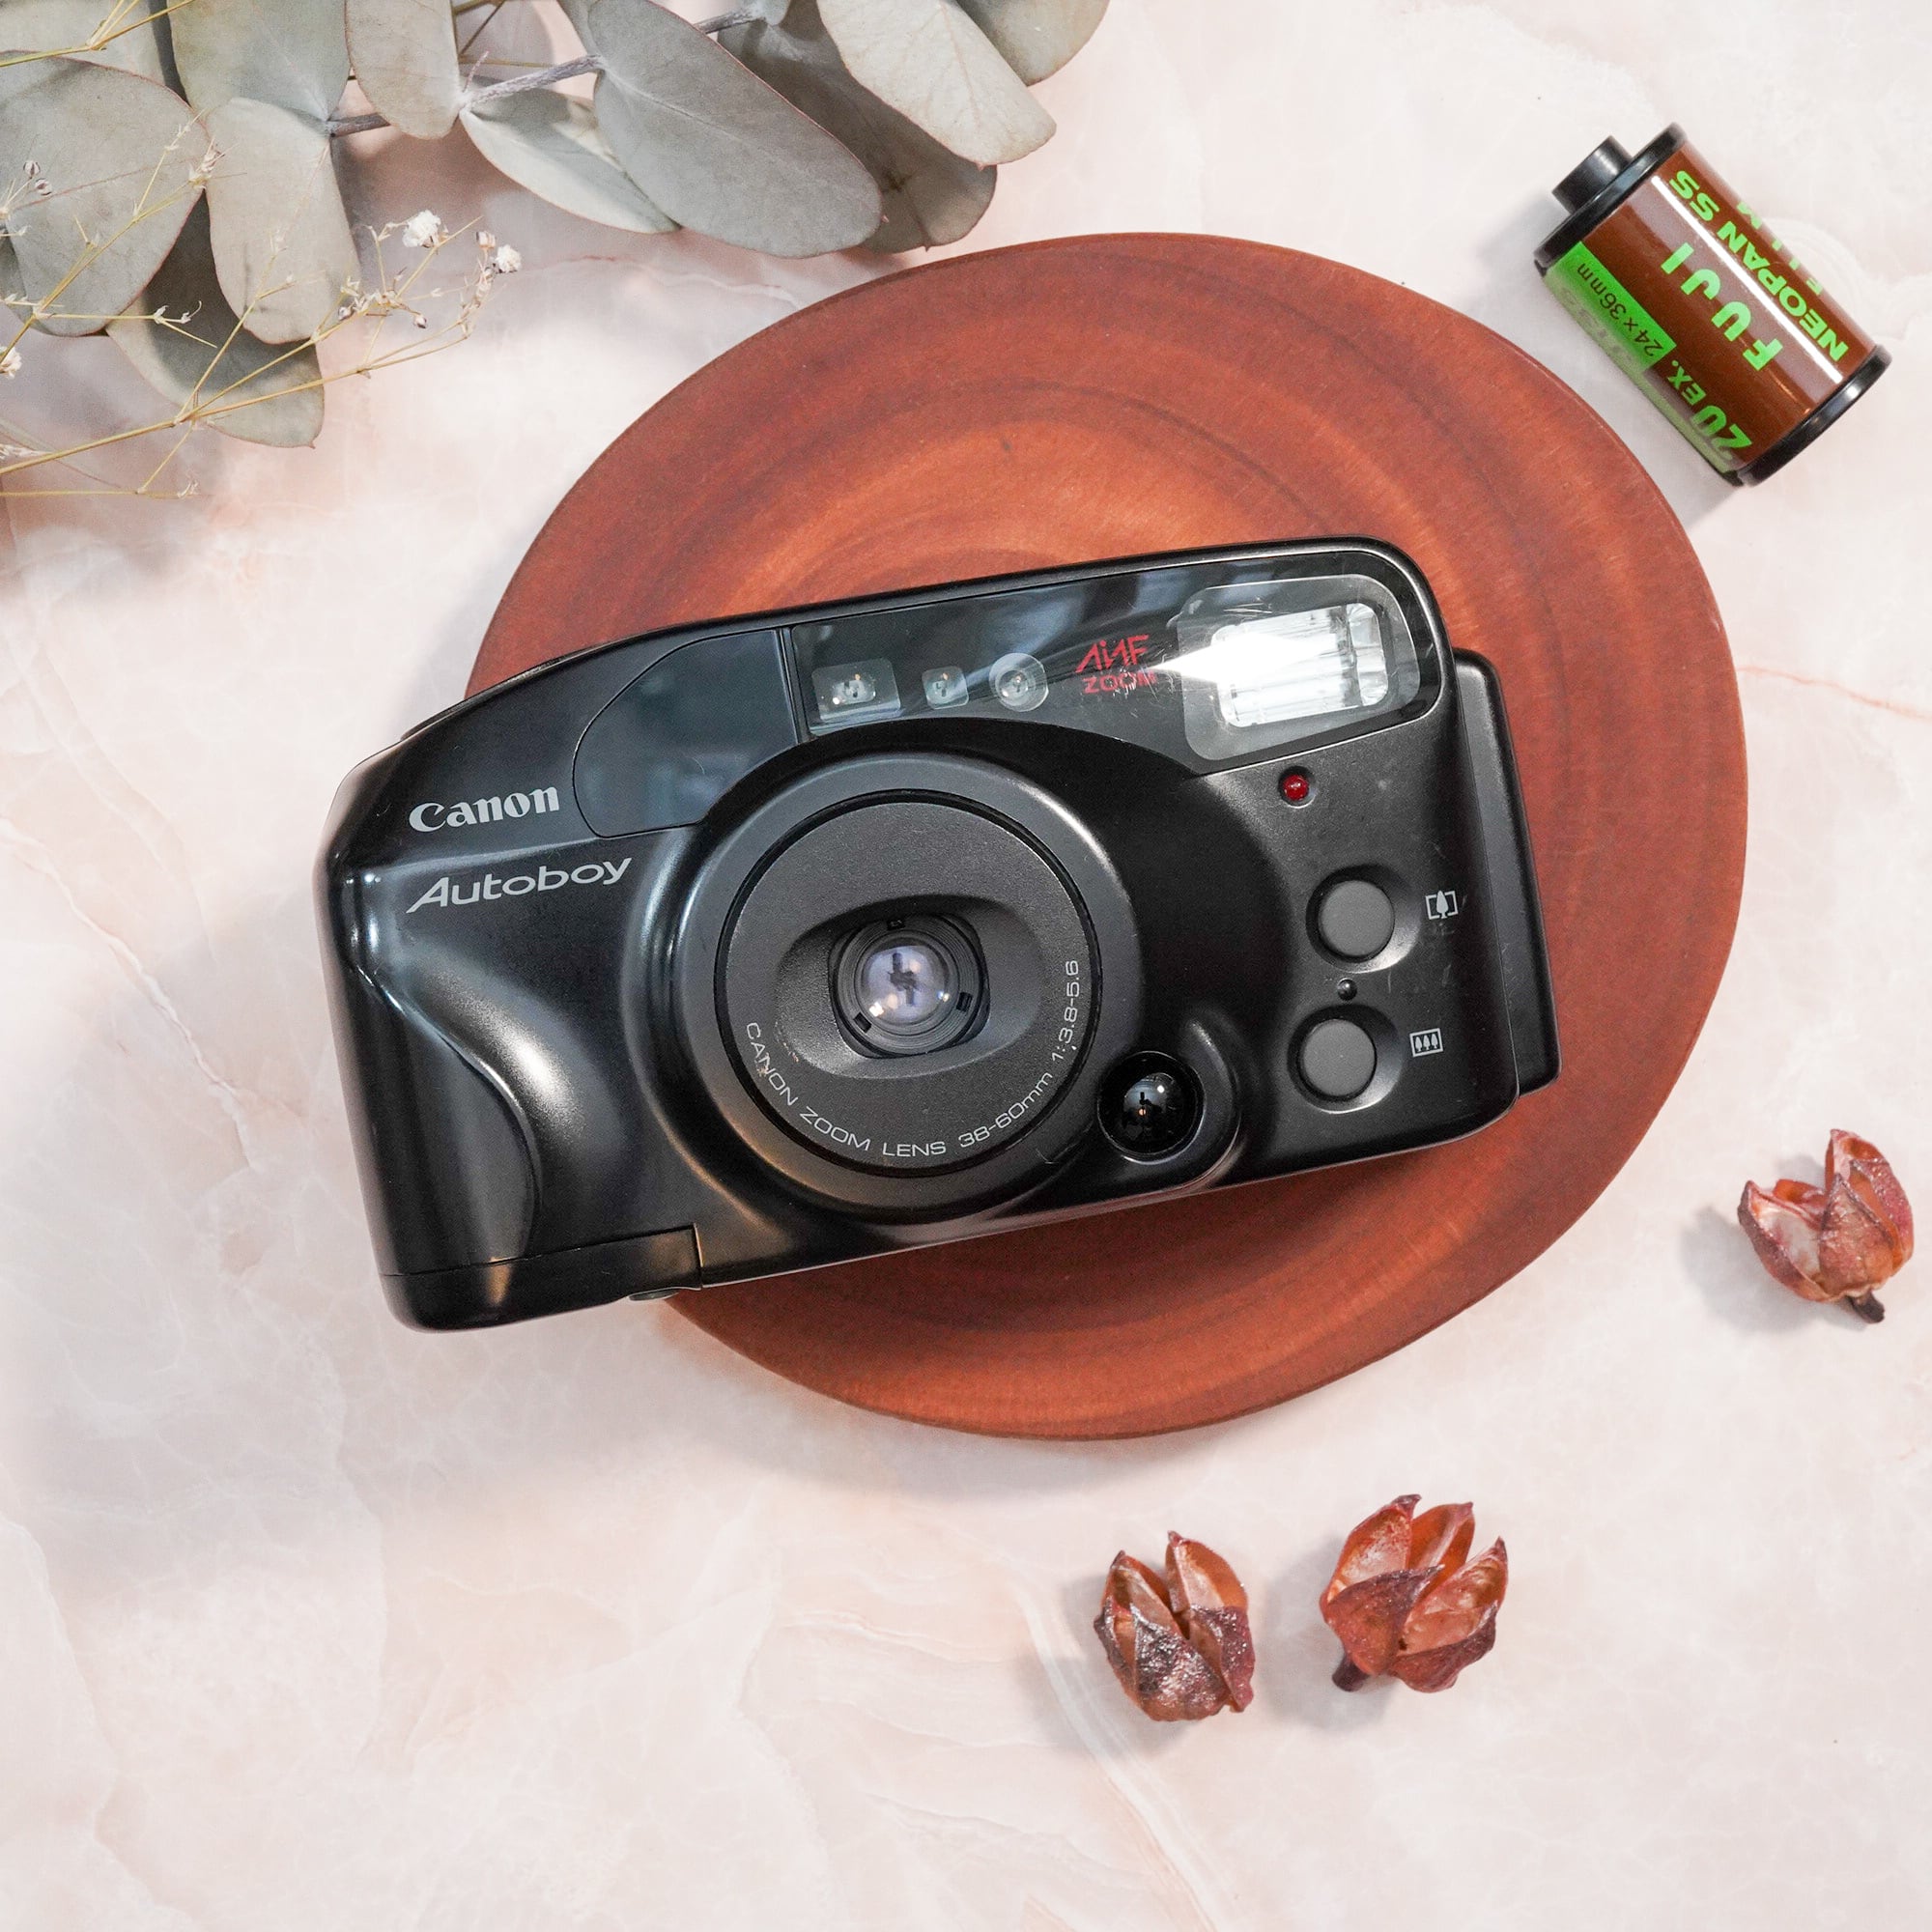 Canon】 New AutoBoy 人気のキャプション機能付き | Macha Cameras